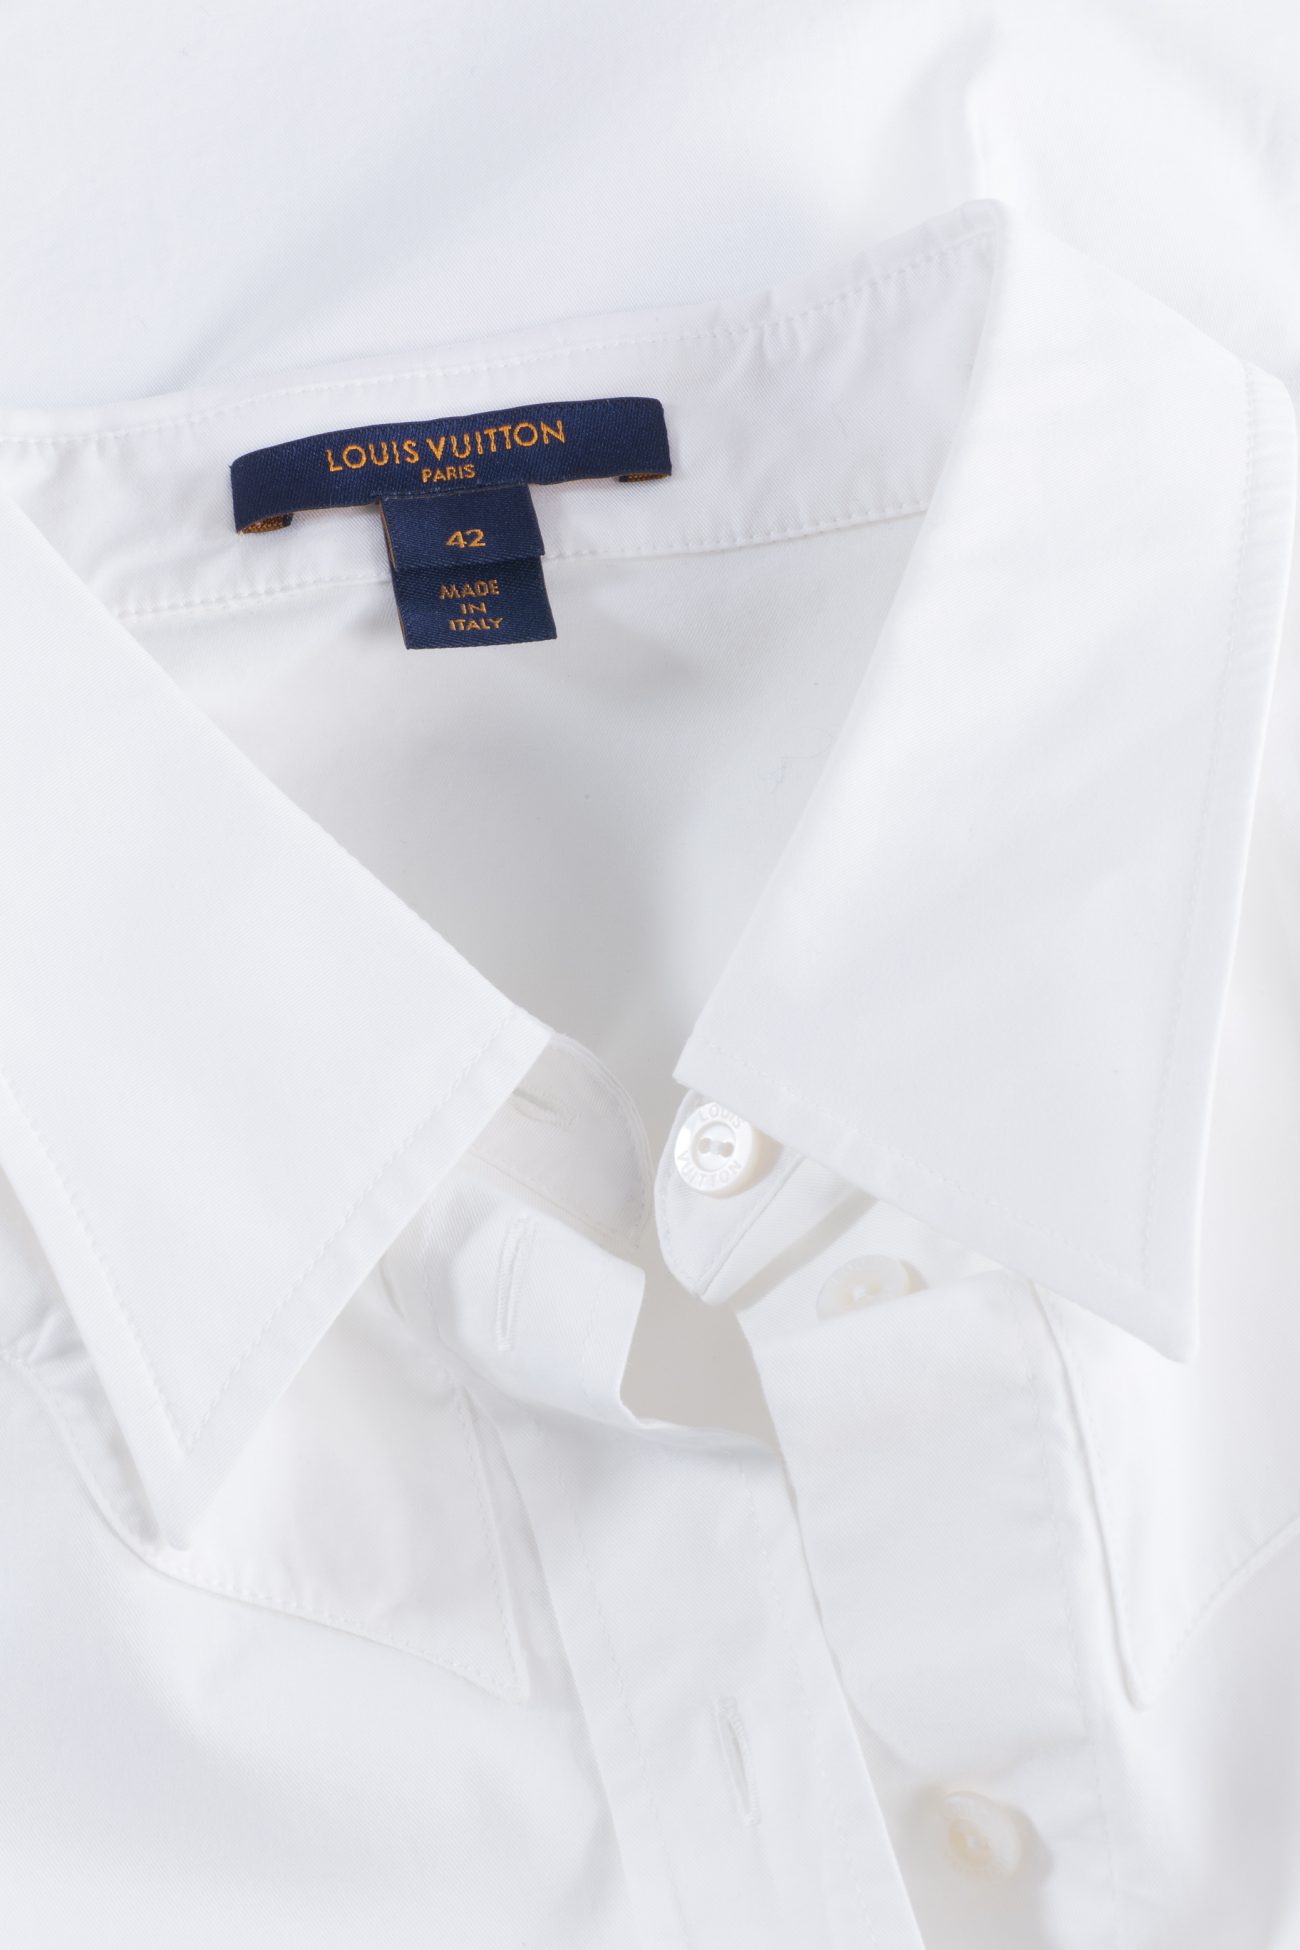 Louis Vuitton Jacket, FR42 - Huntessa Luxury Online Consignment